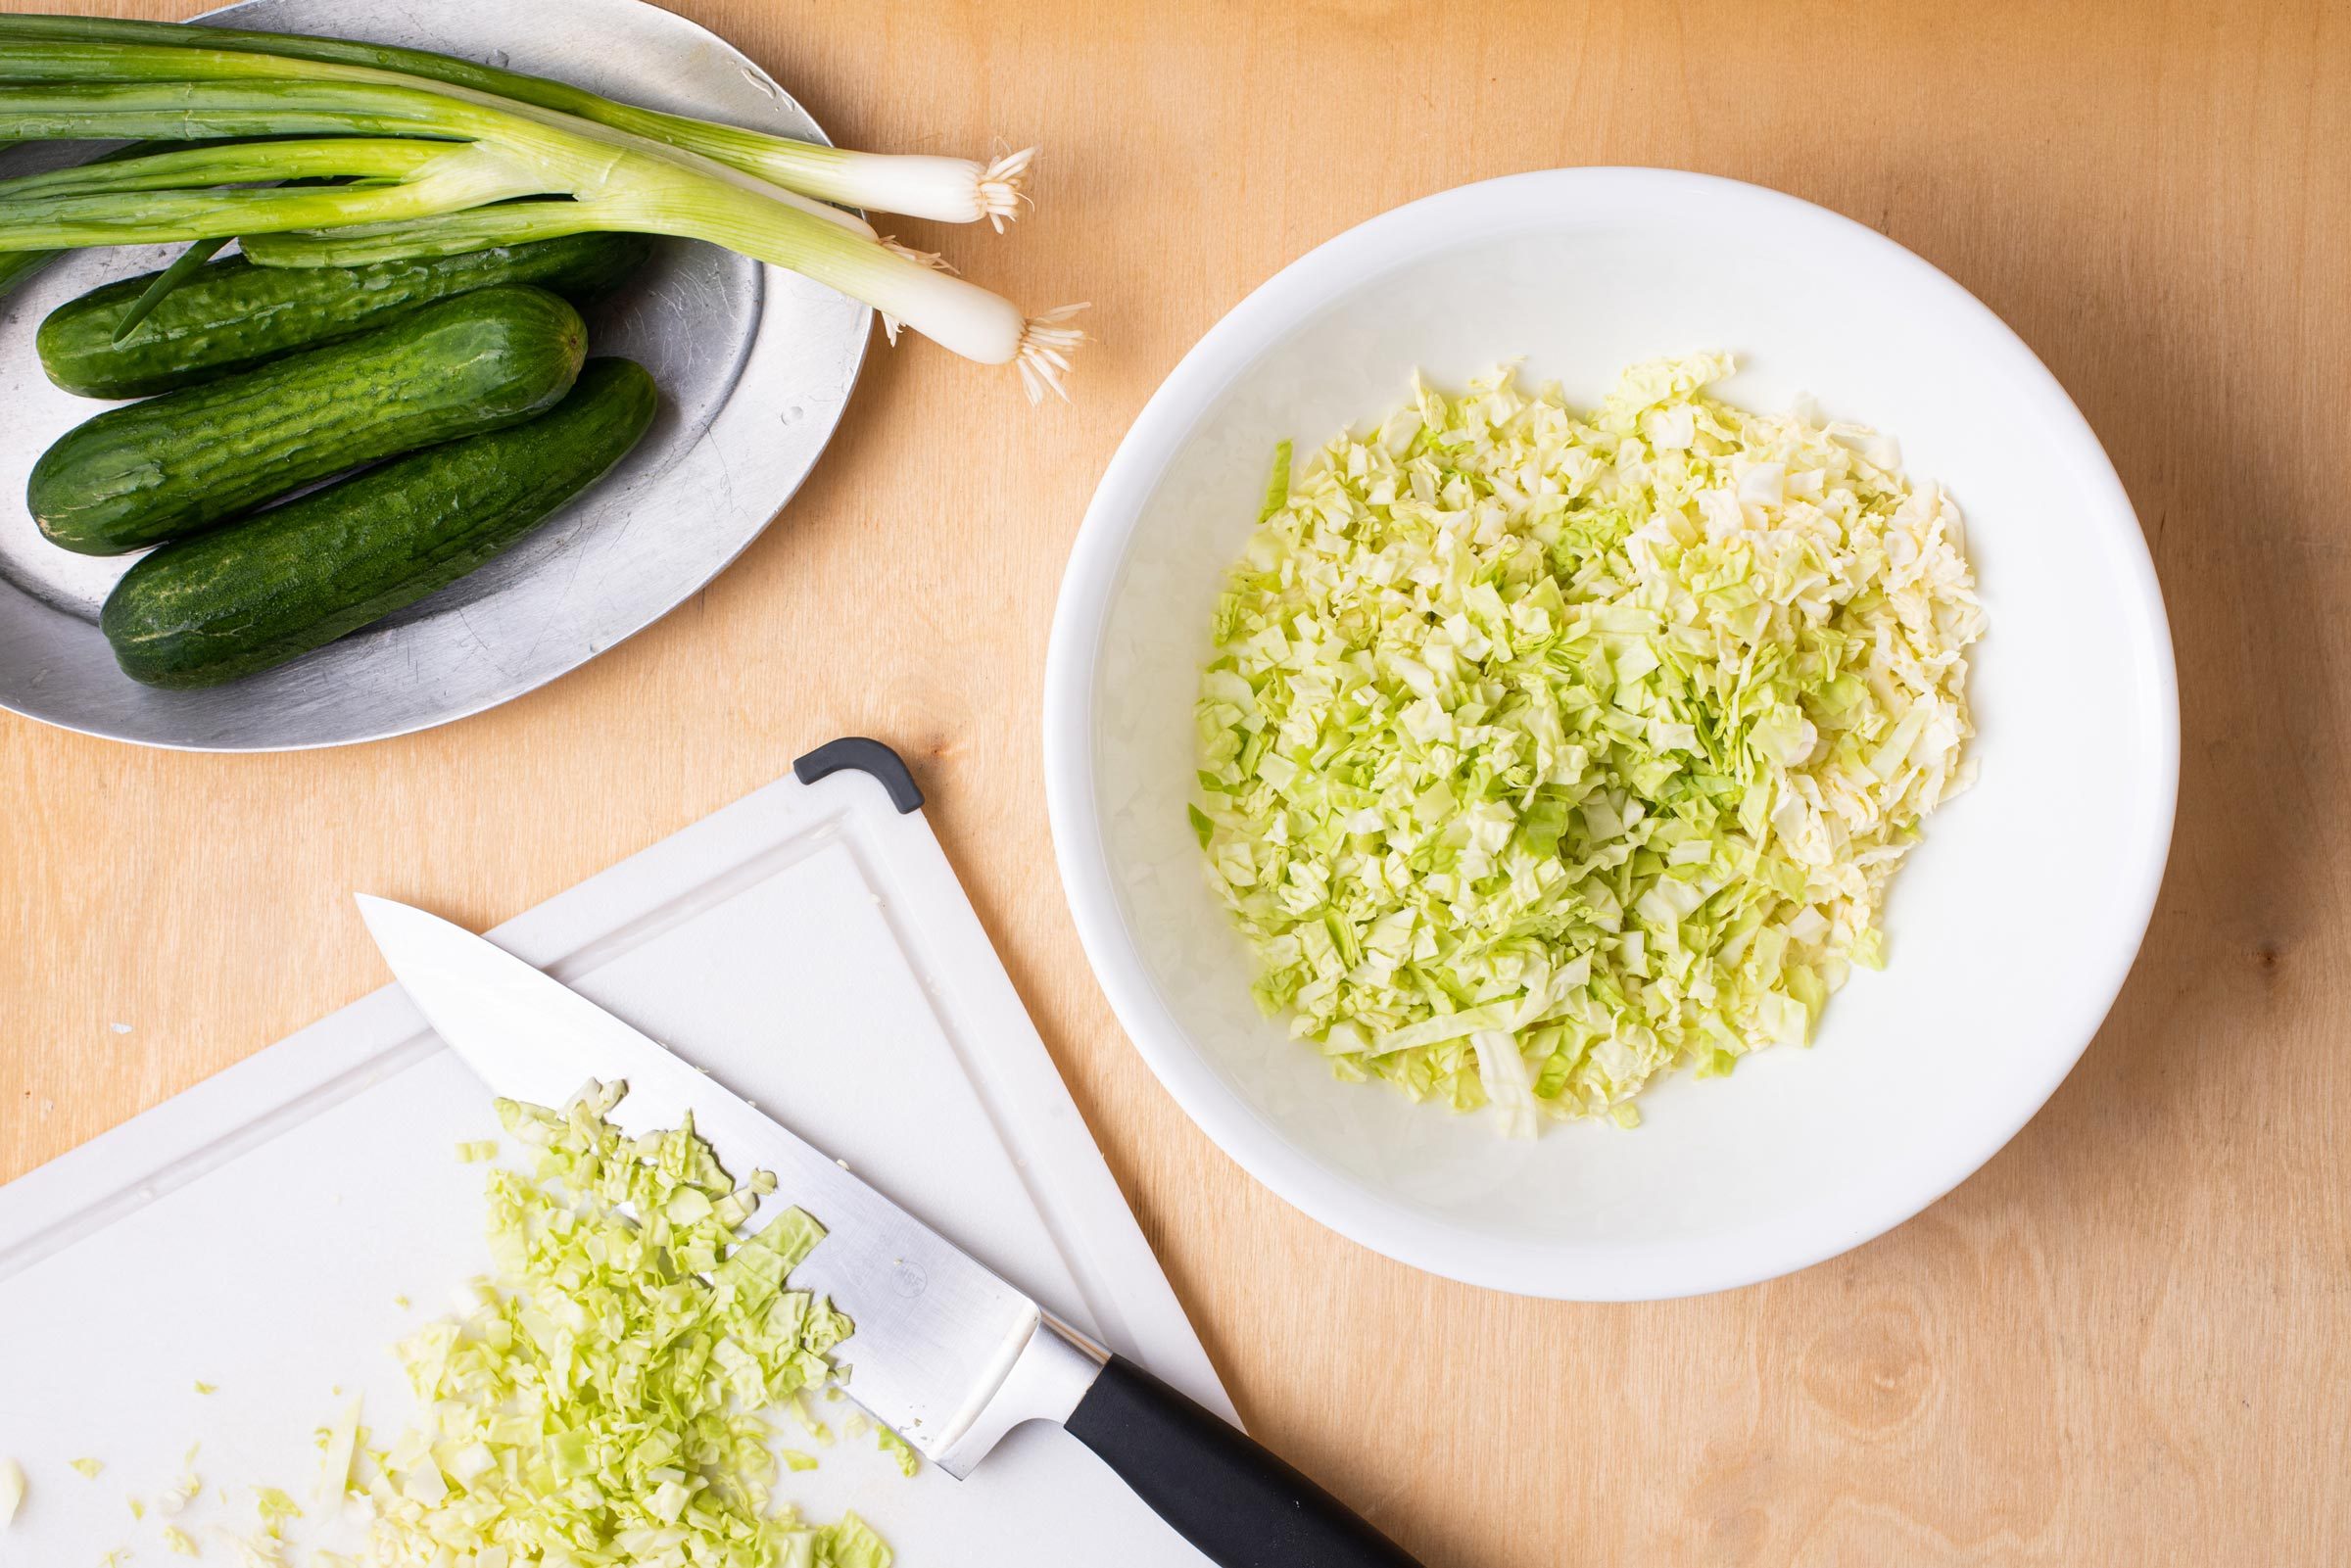 https://www.tasteofhome.com/wp-content/uploads/2023/06/how-to-make-green-goddess-salad-2-Alexandra-Shytsman-for-Taste-of-Home-.jpg?fit=680%2C454